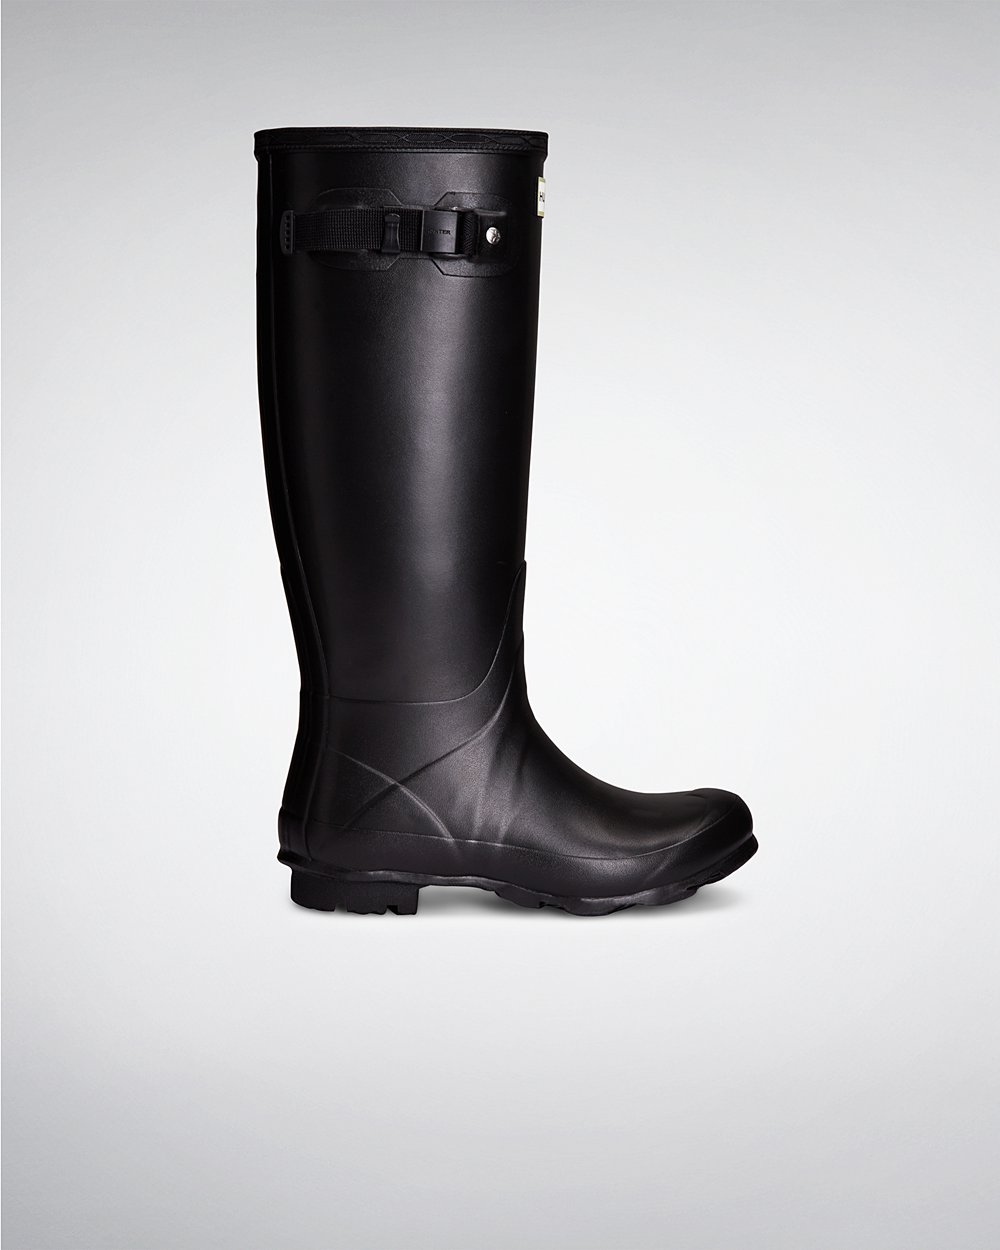 Womens Tall Rain Boots - Hunter Norris Field Neoprene Lined (81KXBHVWT) - Black